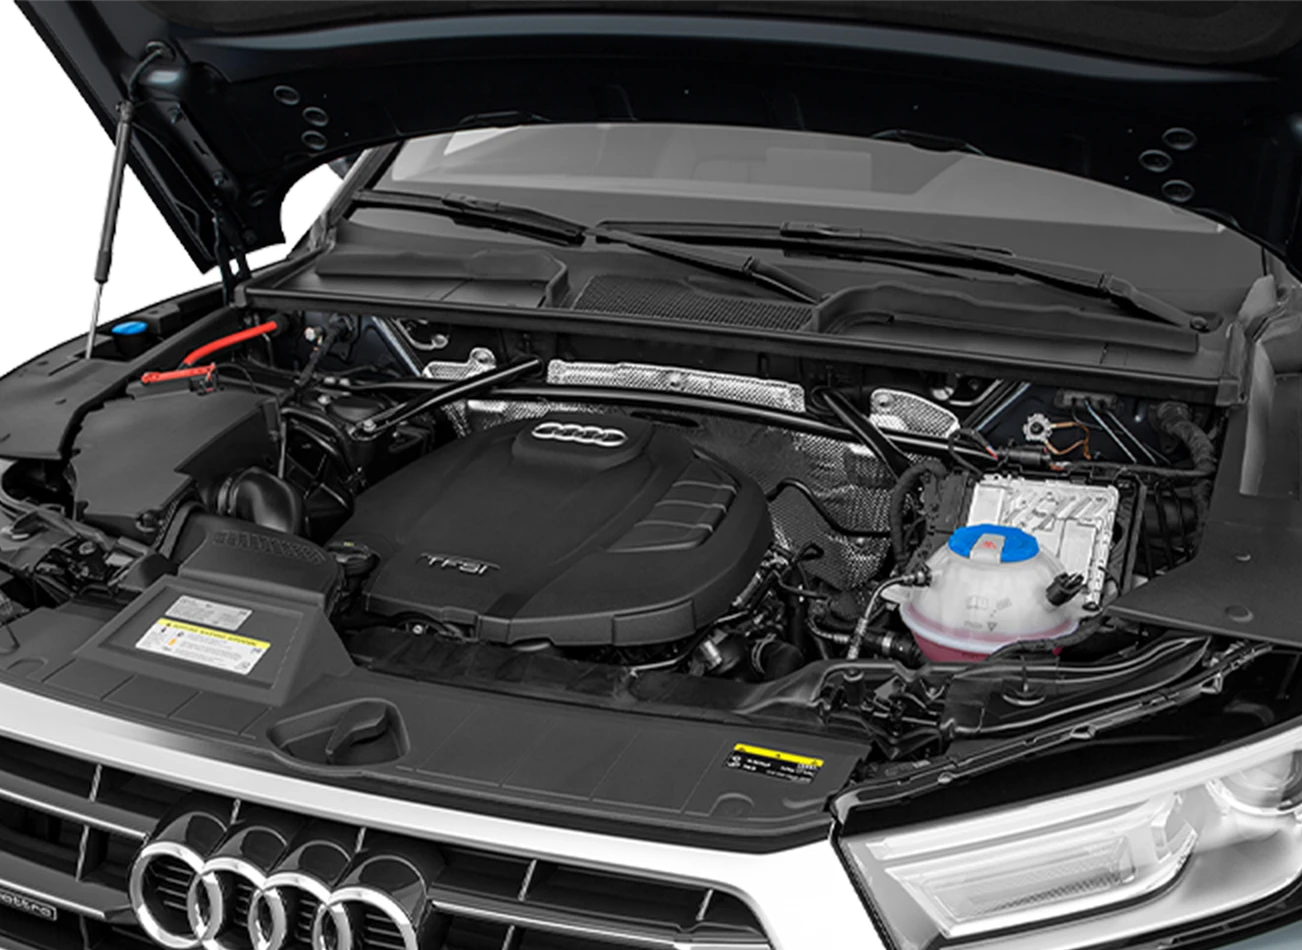 2019 Audi Q5 Review: Reviews, Photos, and More: Reasons to Buy #1 | CarMax